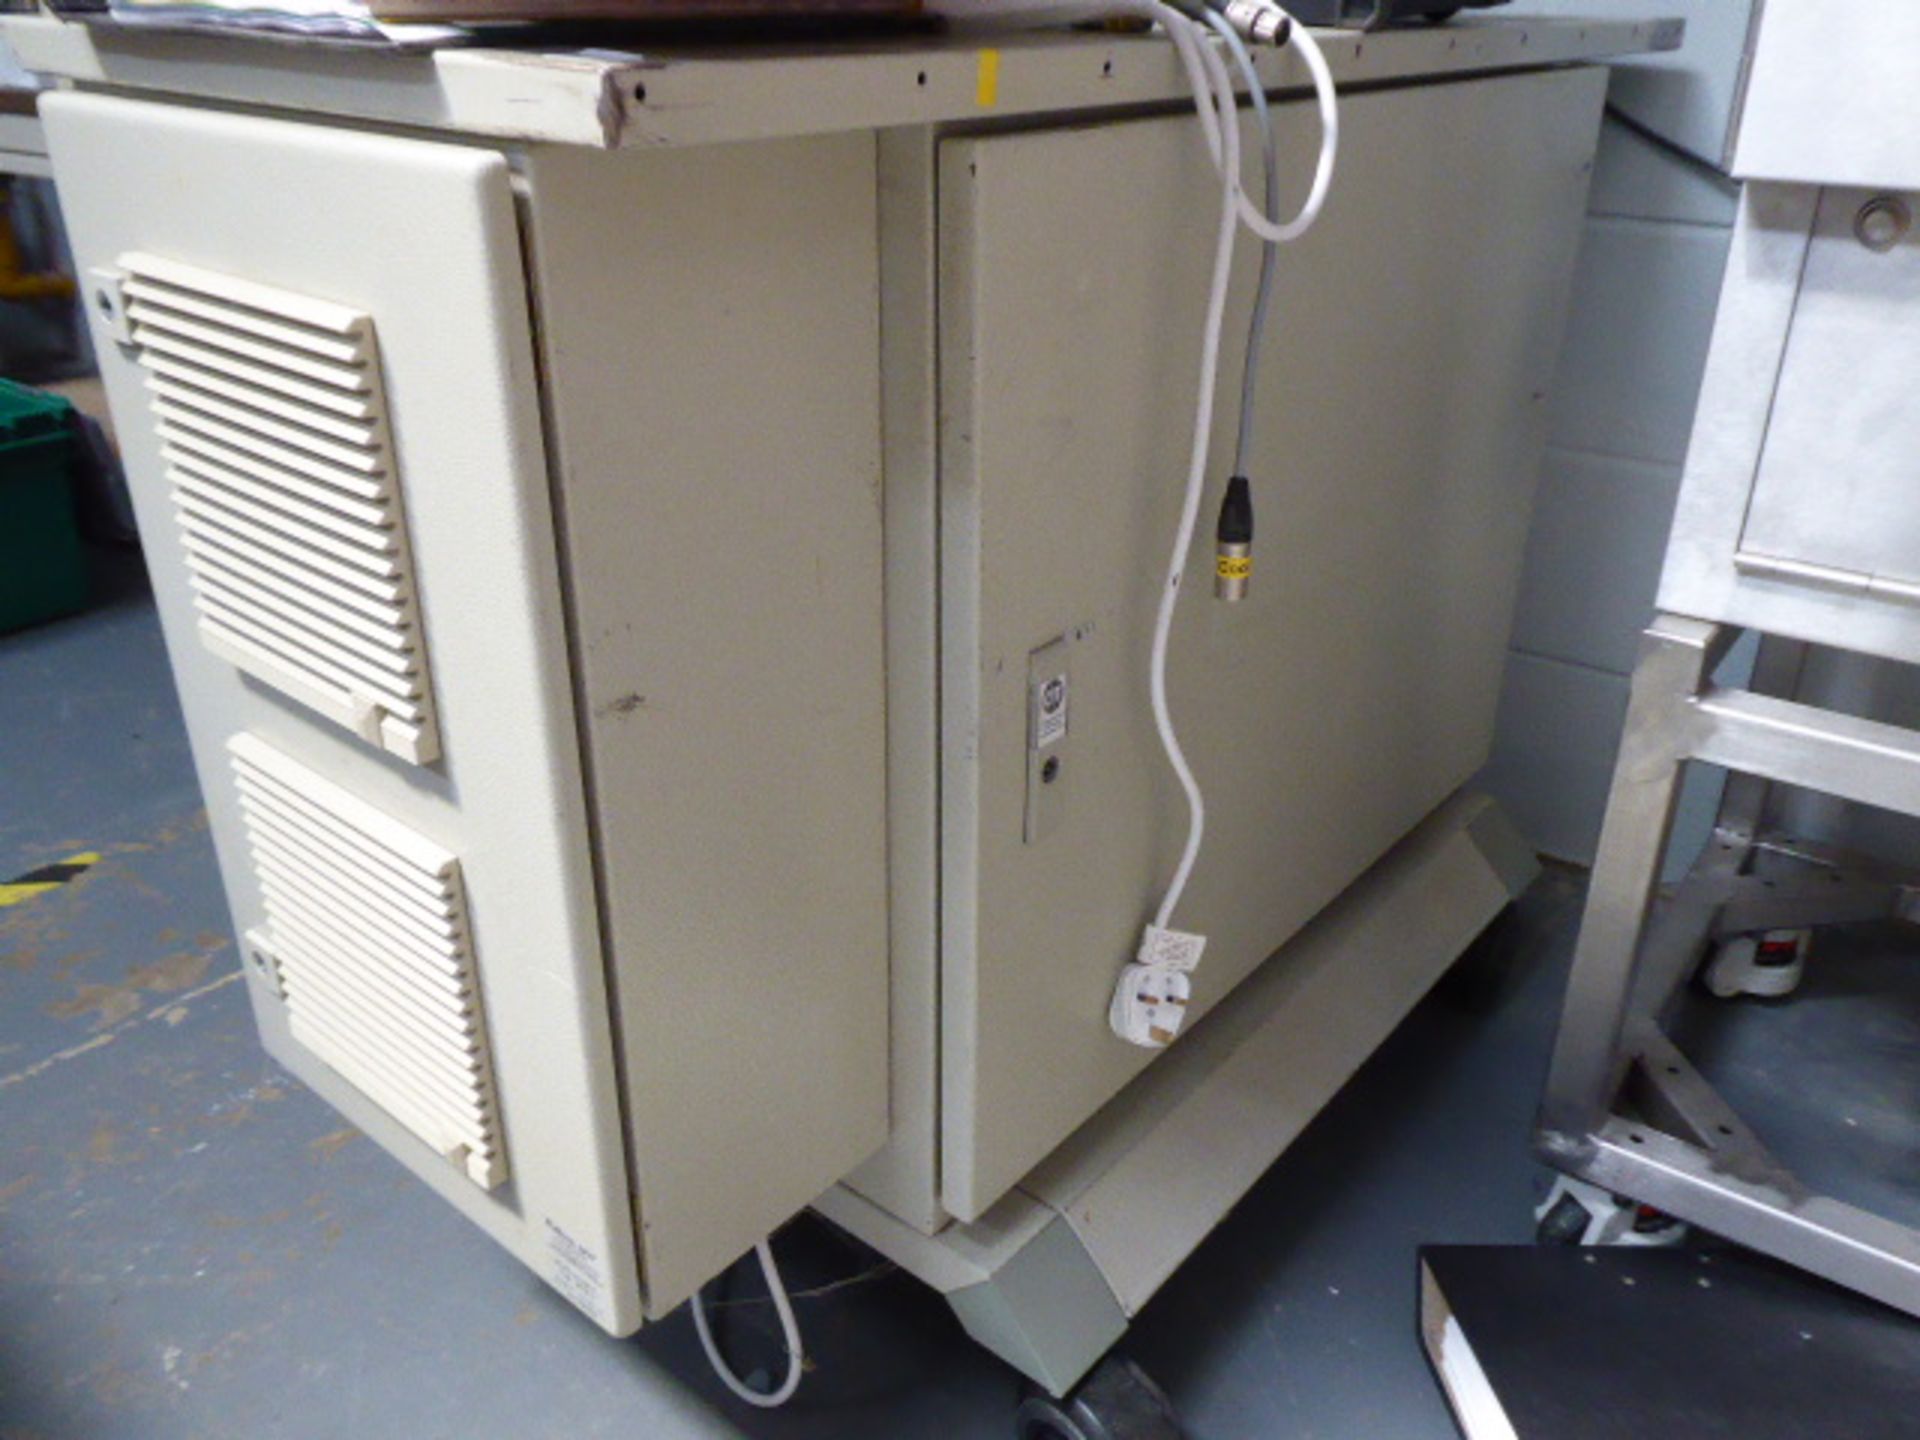 Balteau graphic generator 160KV cathodic industrial X-Ray generator max power 400 watt wired for - Image 9 of 12